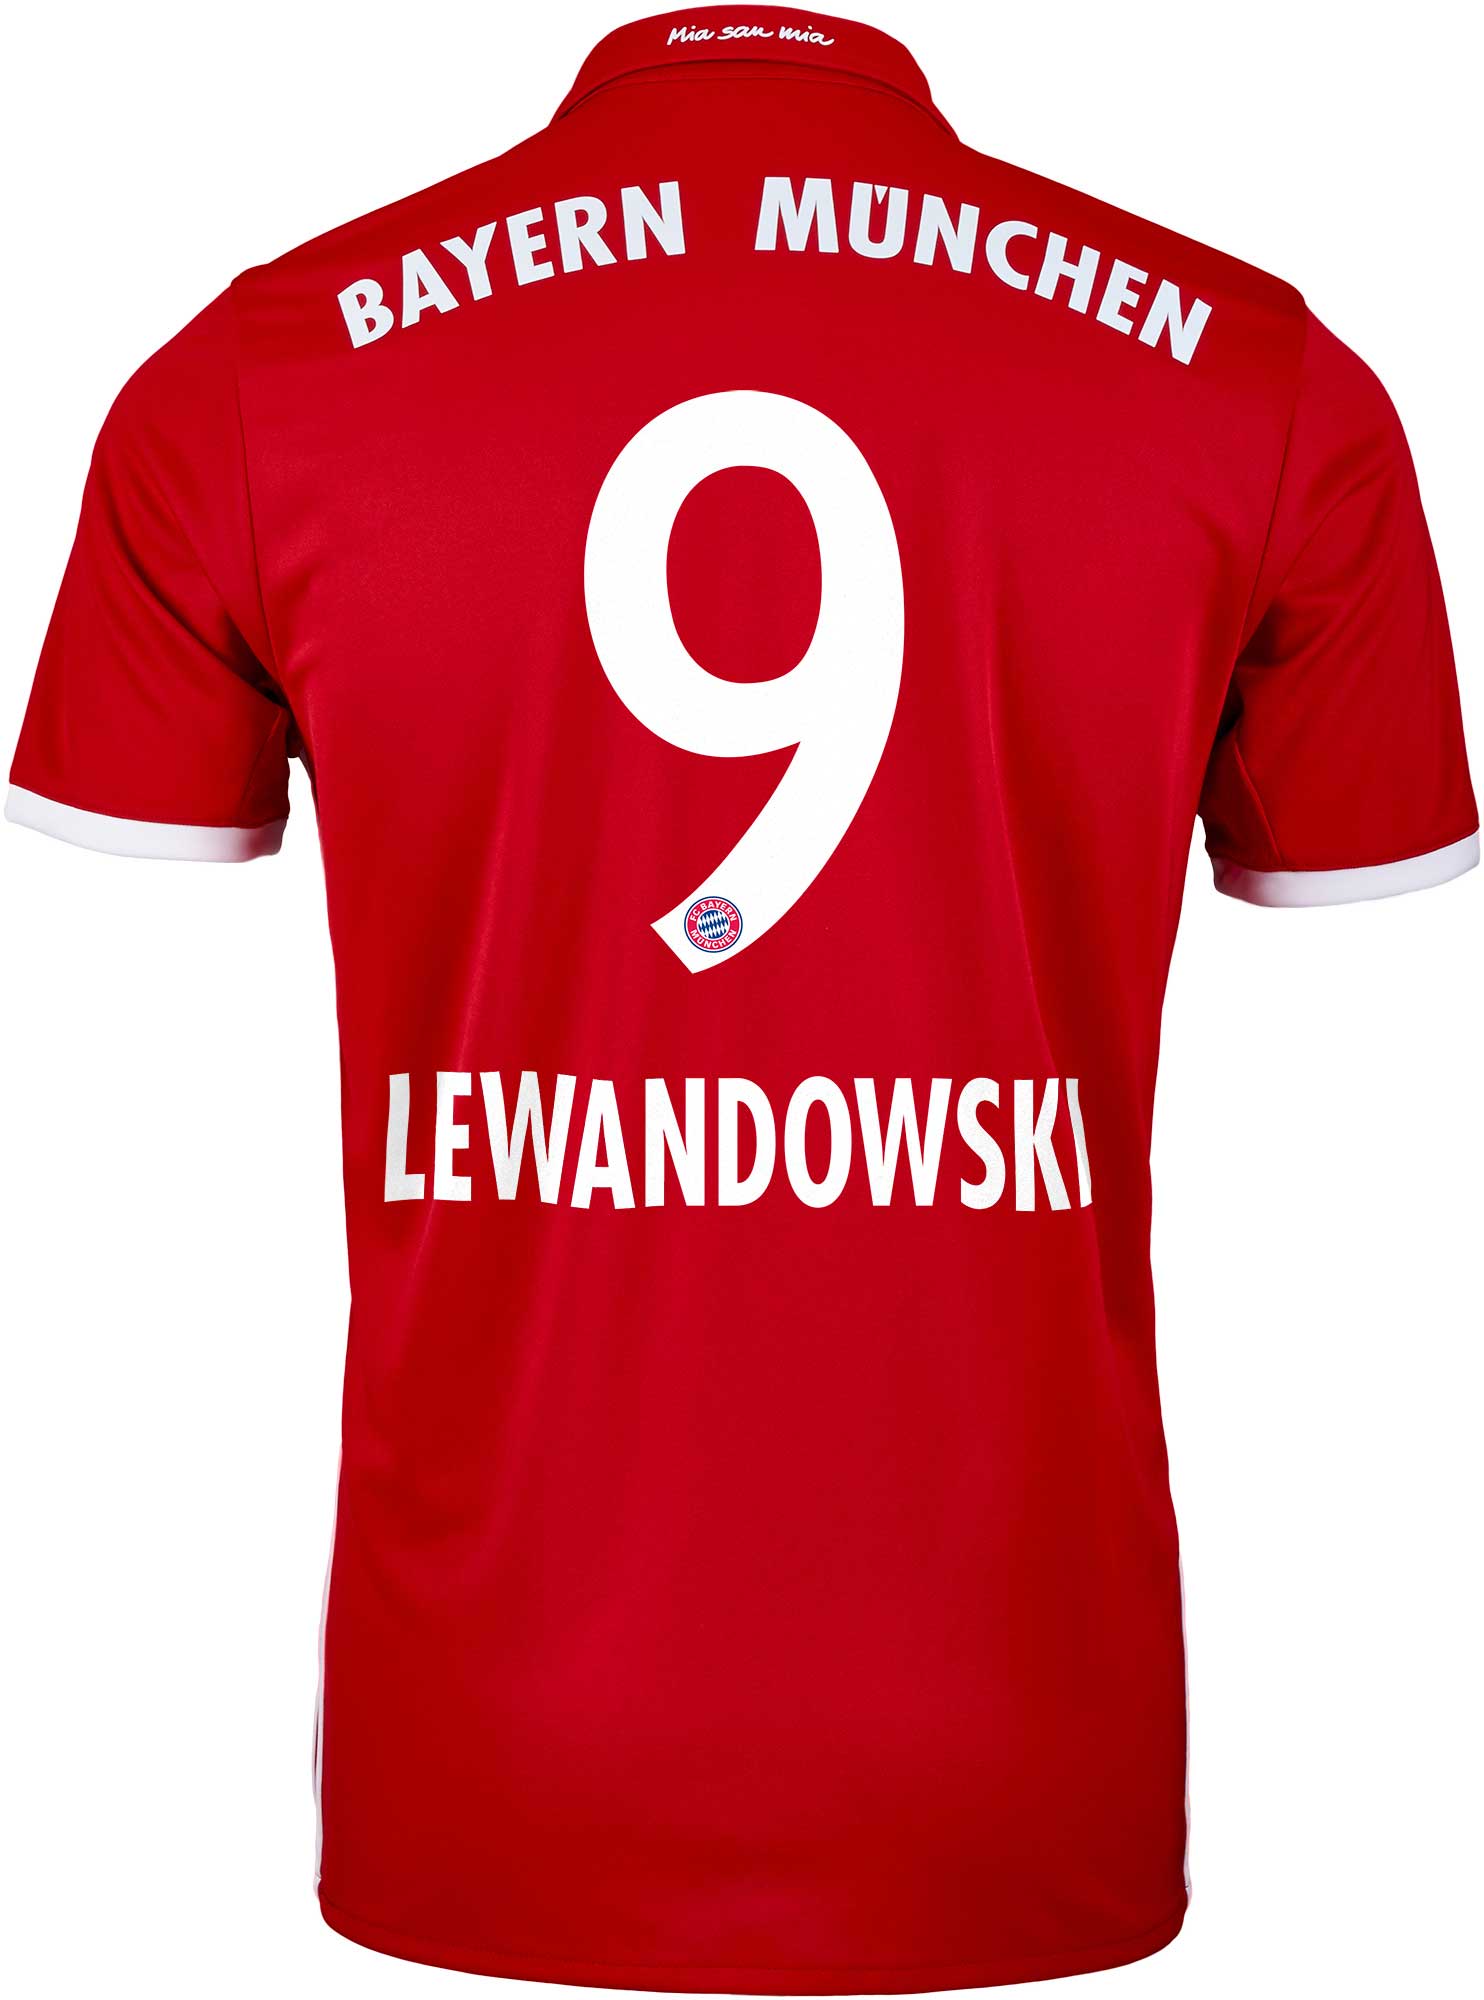 lewandowski jersey number